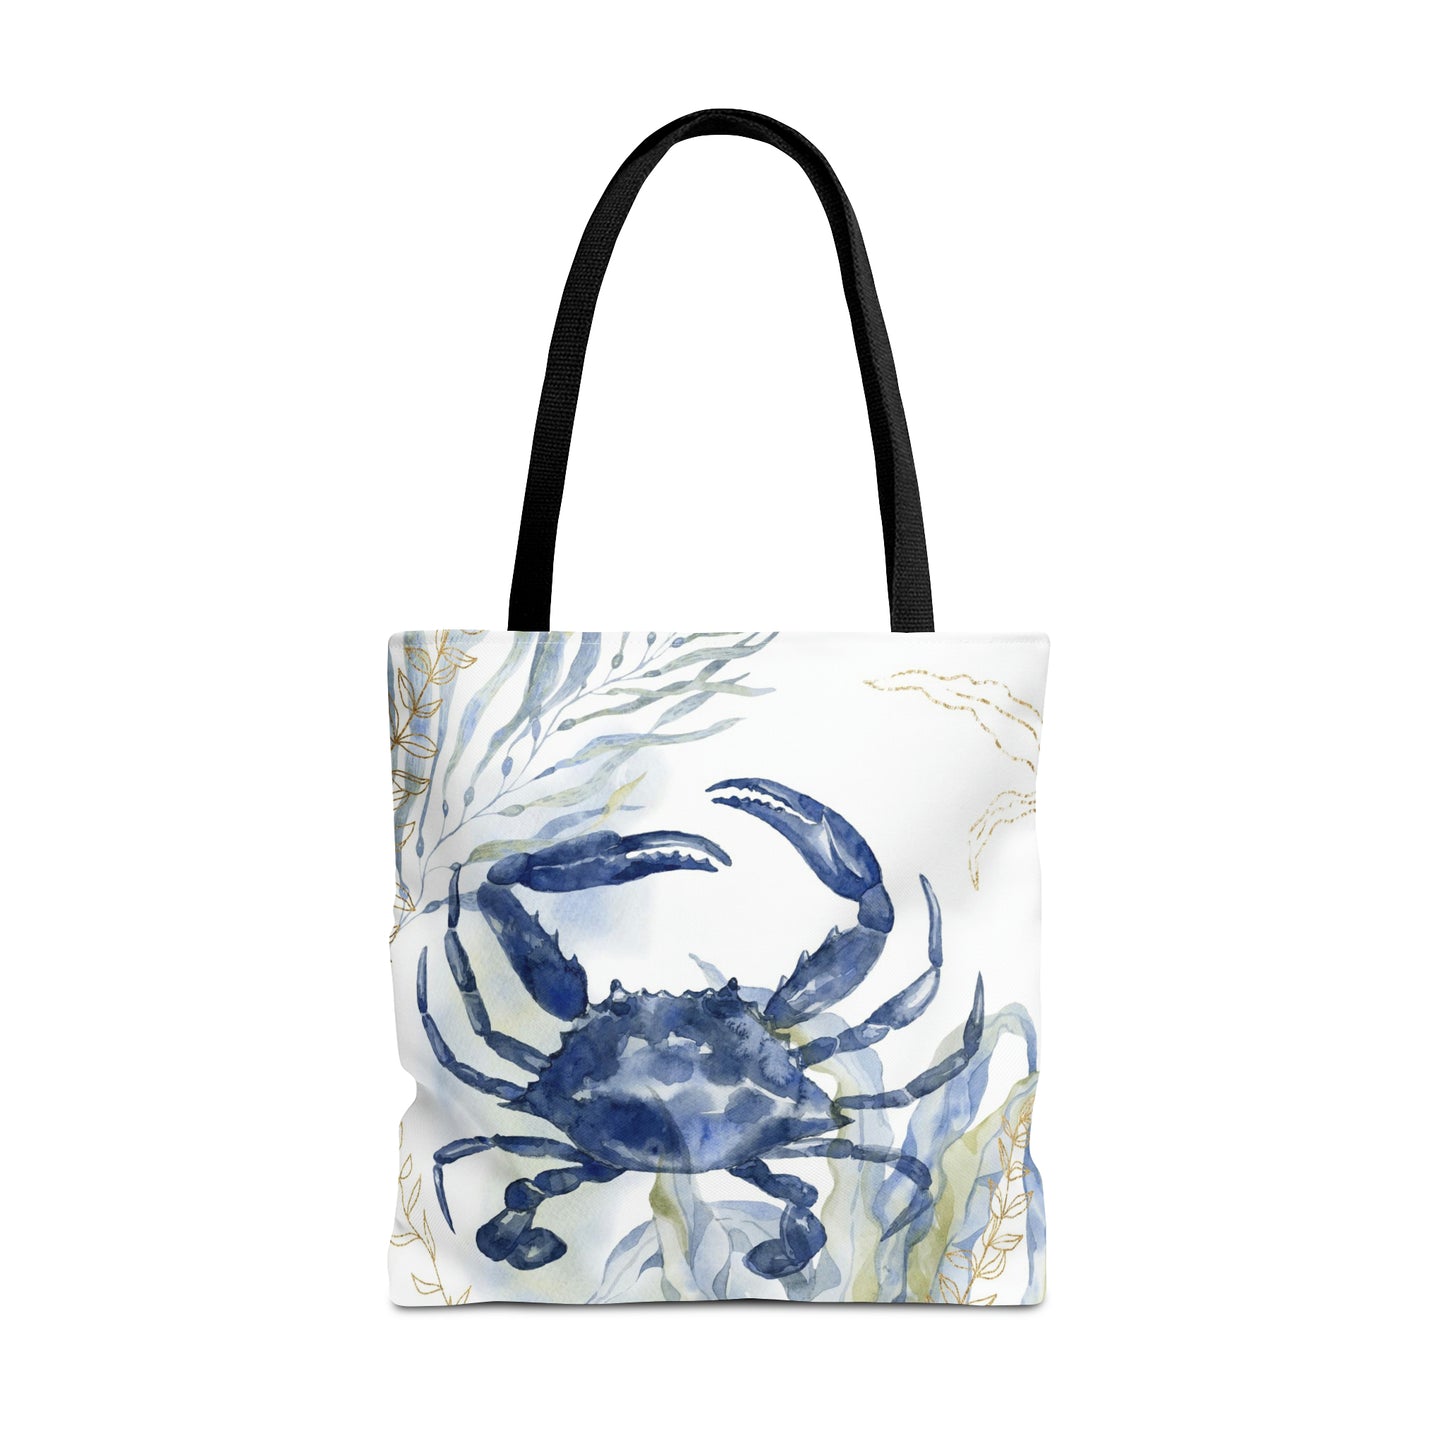 Blue Crab in the sea tote